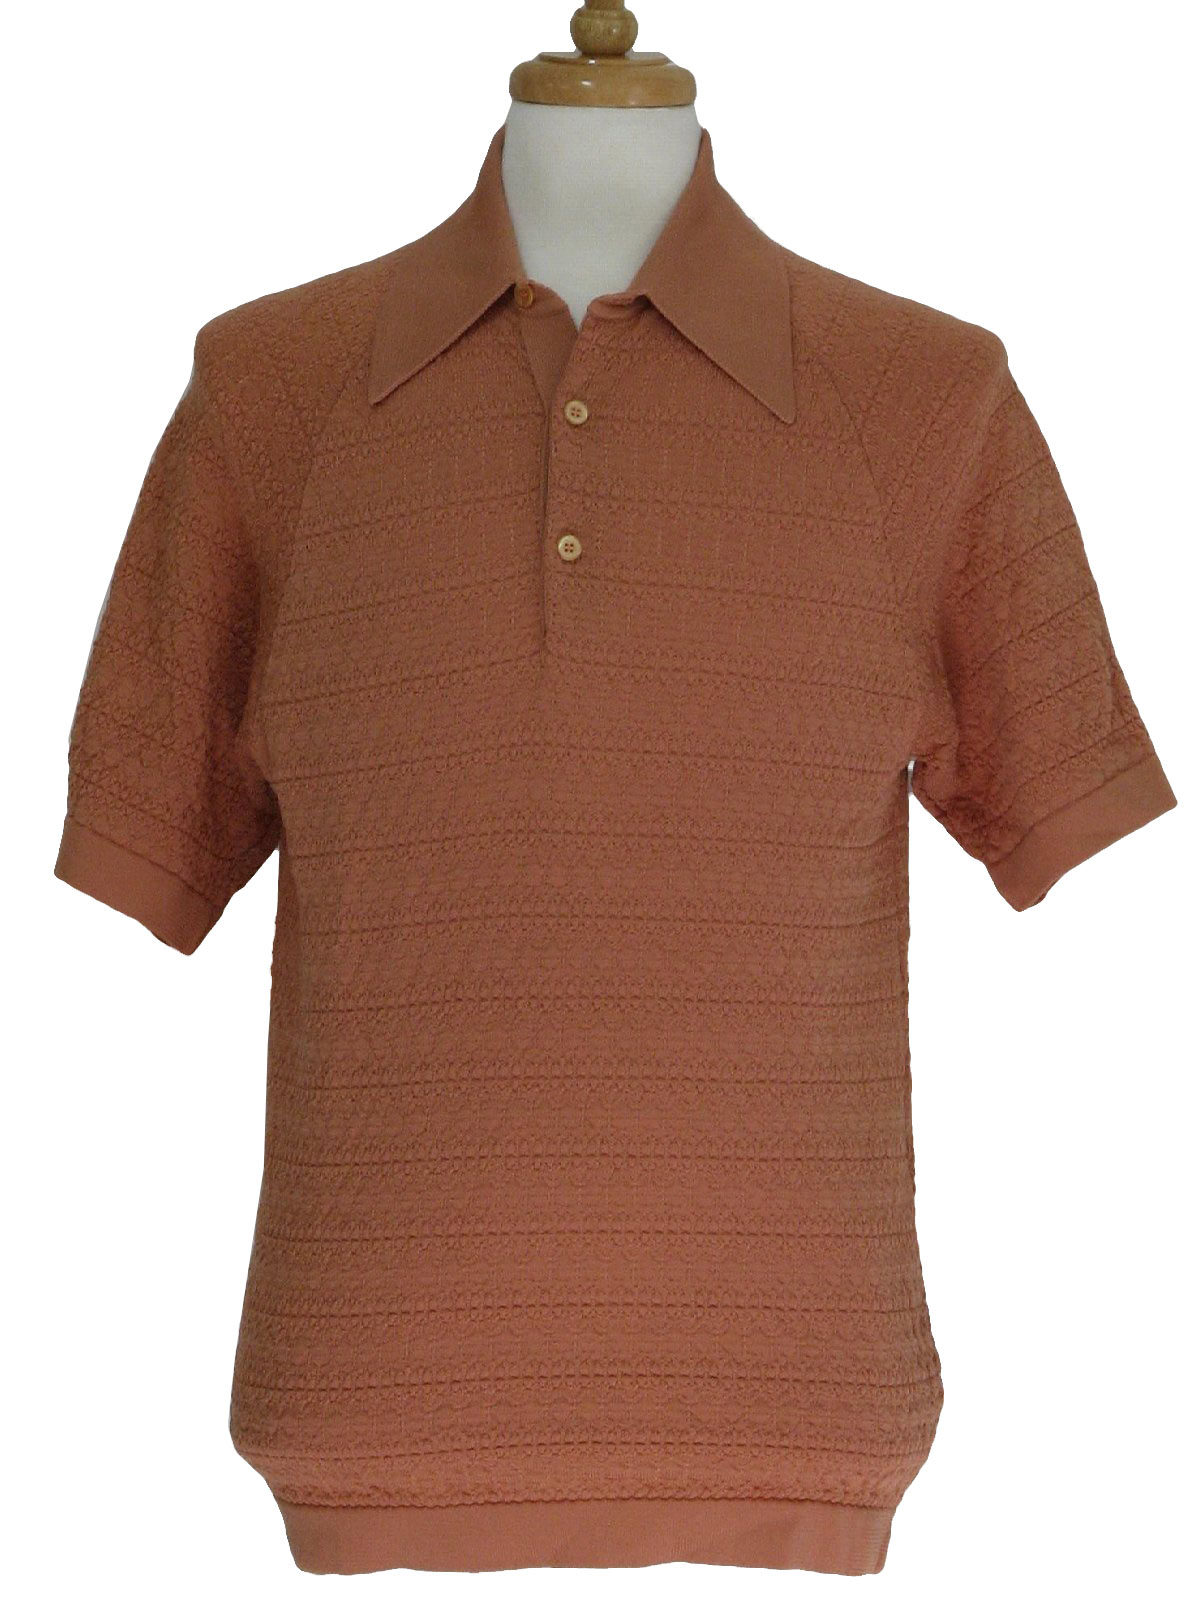 60's Vintage Knit Shirt: Late 60s -Donegal Coleseta- Mens pale